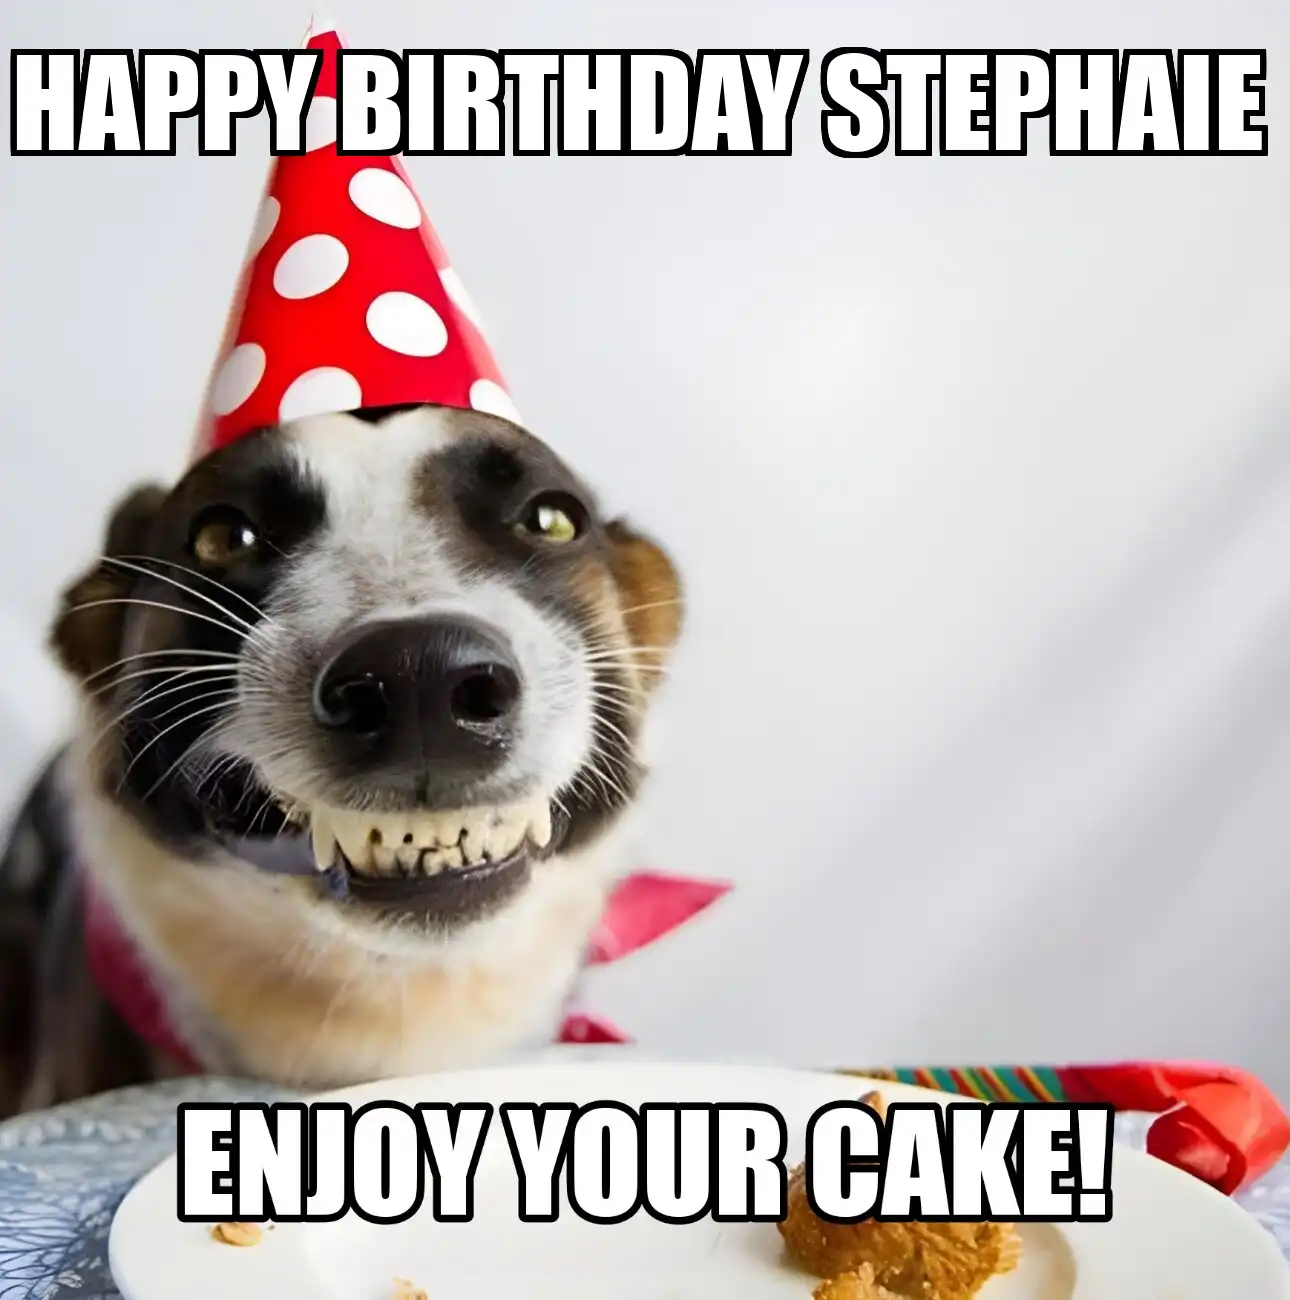 Happy Birthday Stephaie Enjoy Your Cake Dog Meme